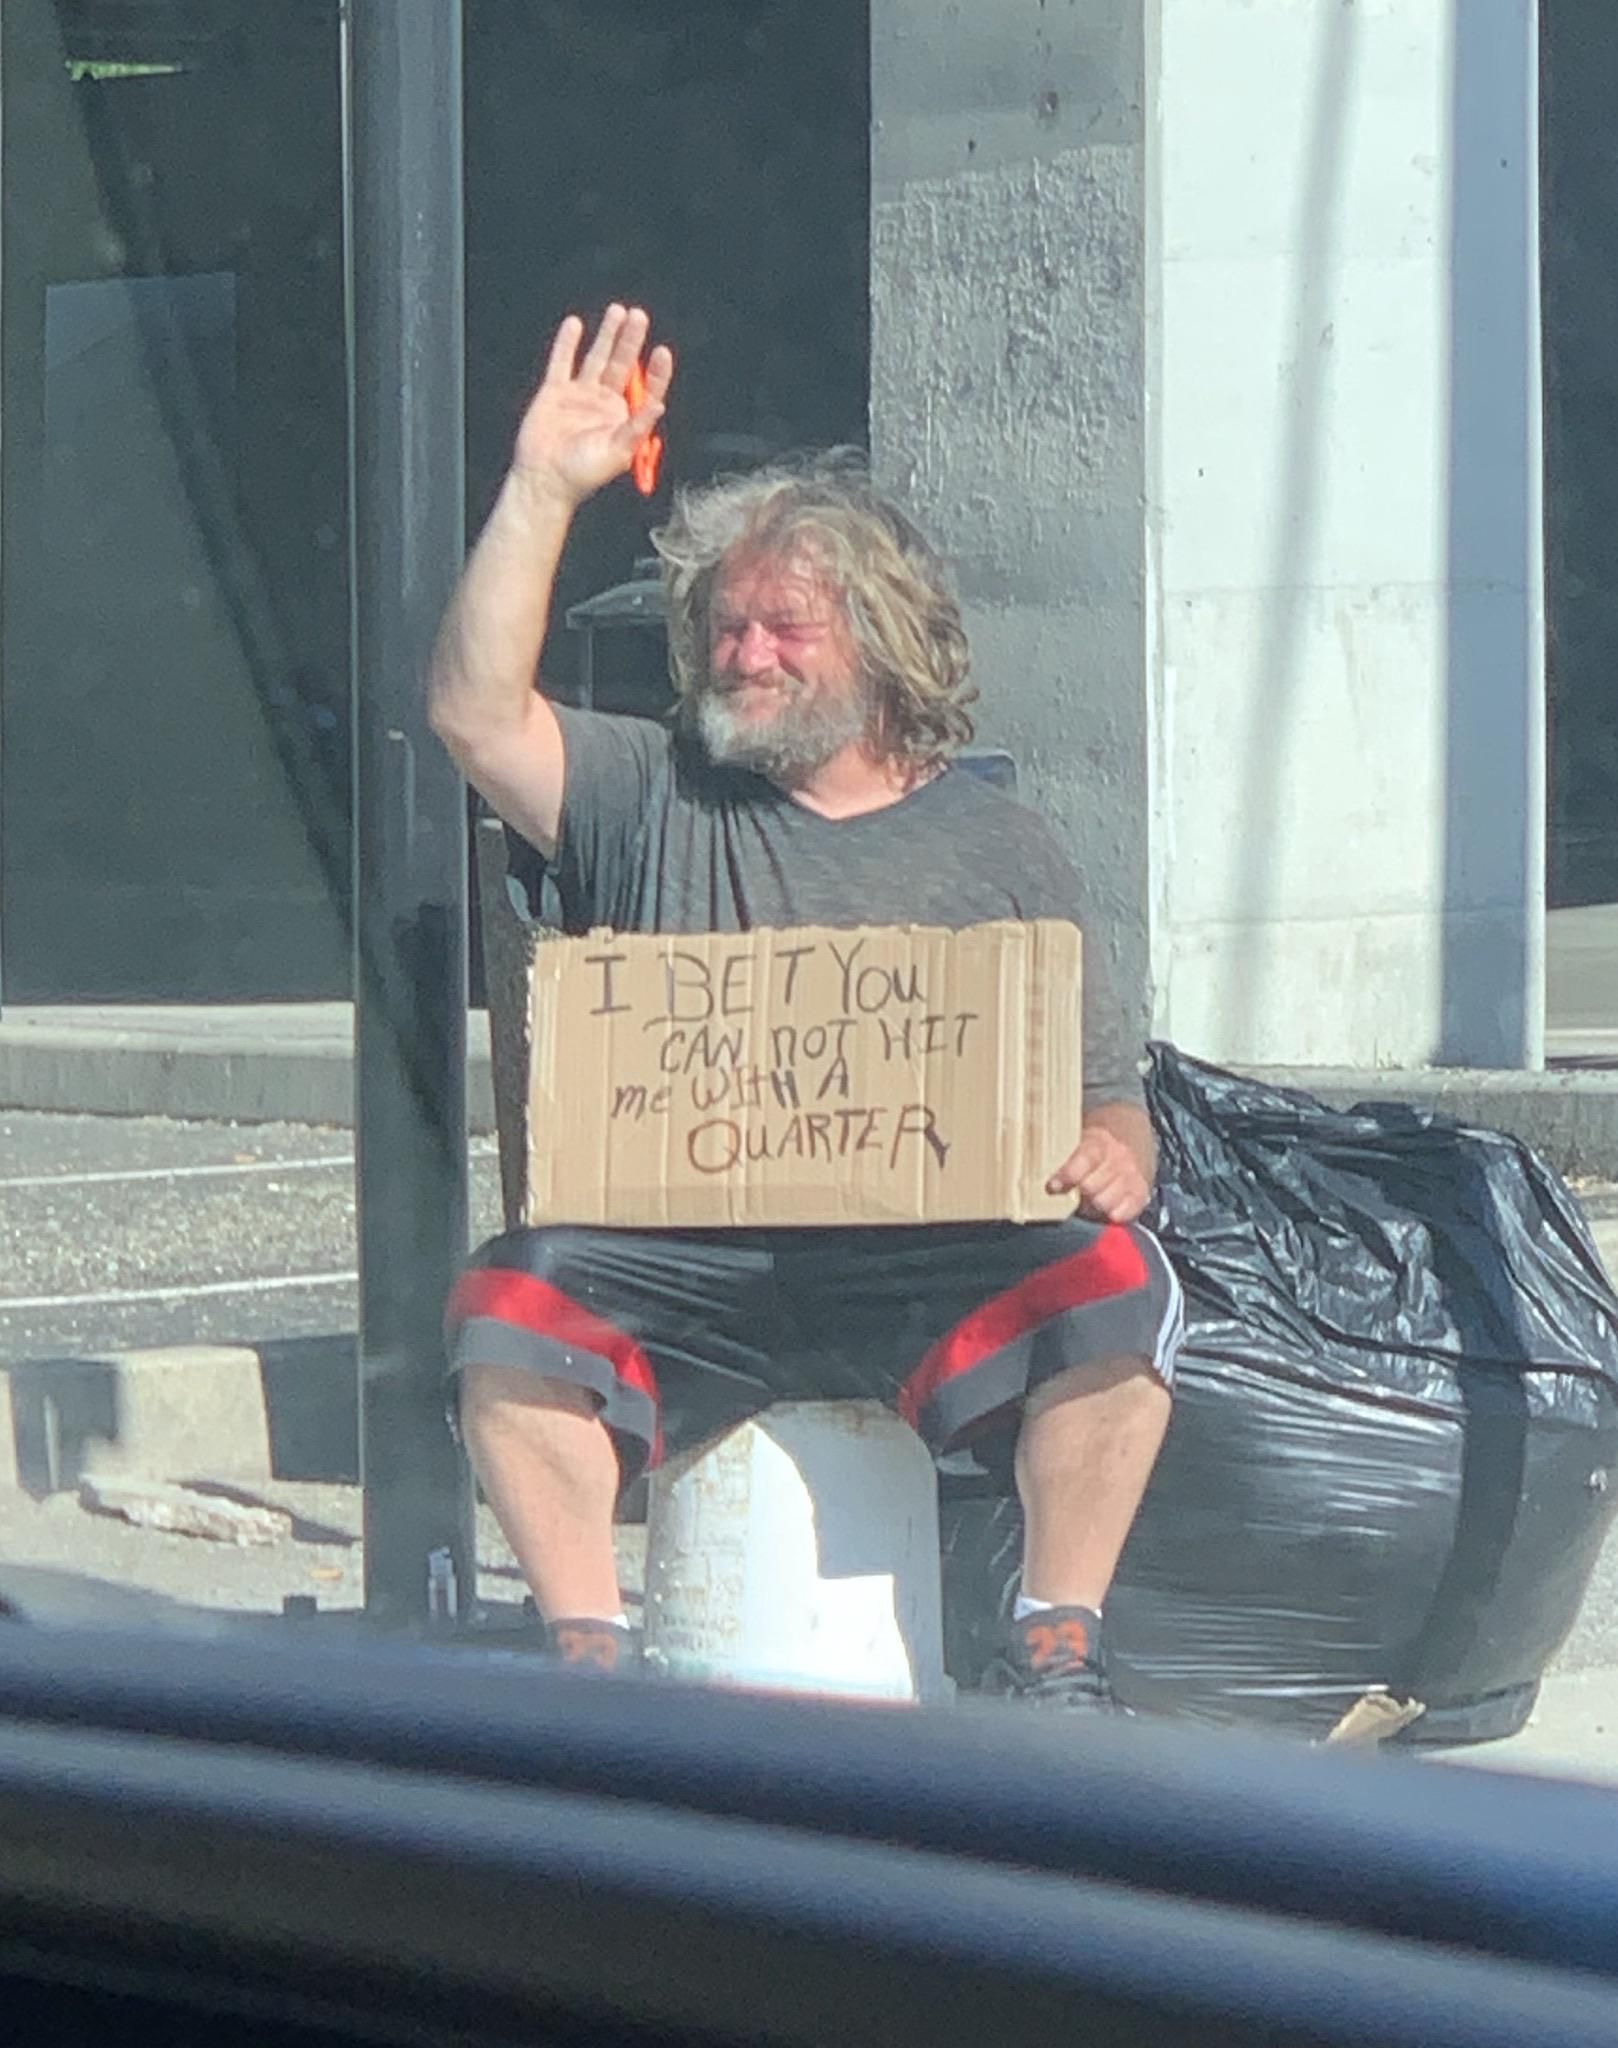 Homeless man near me is a savage